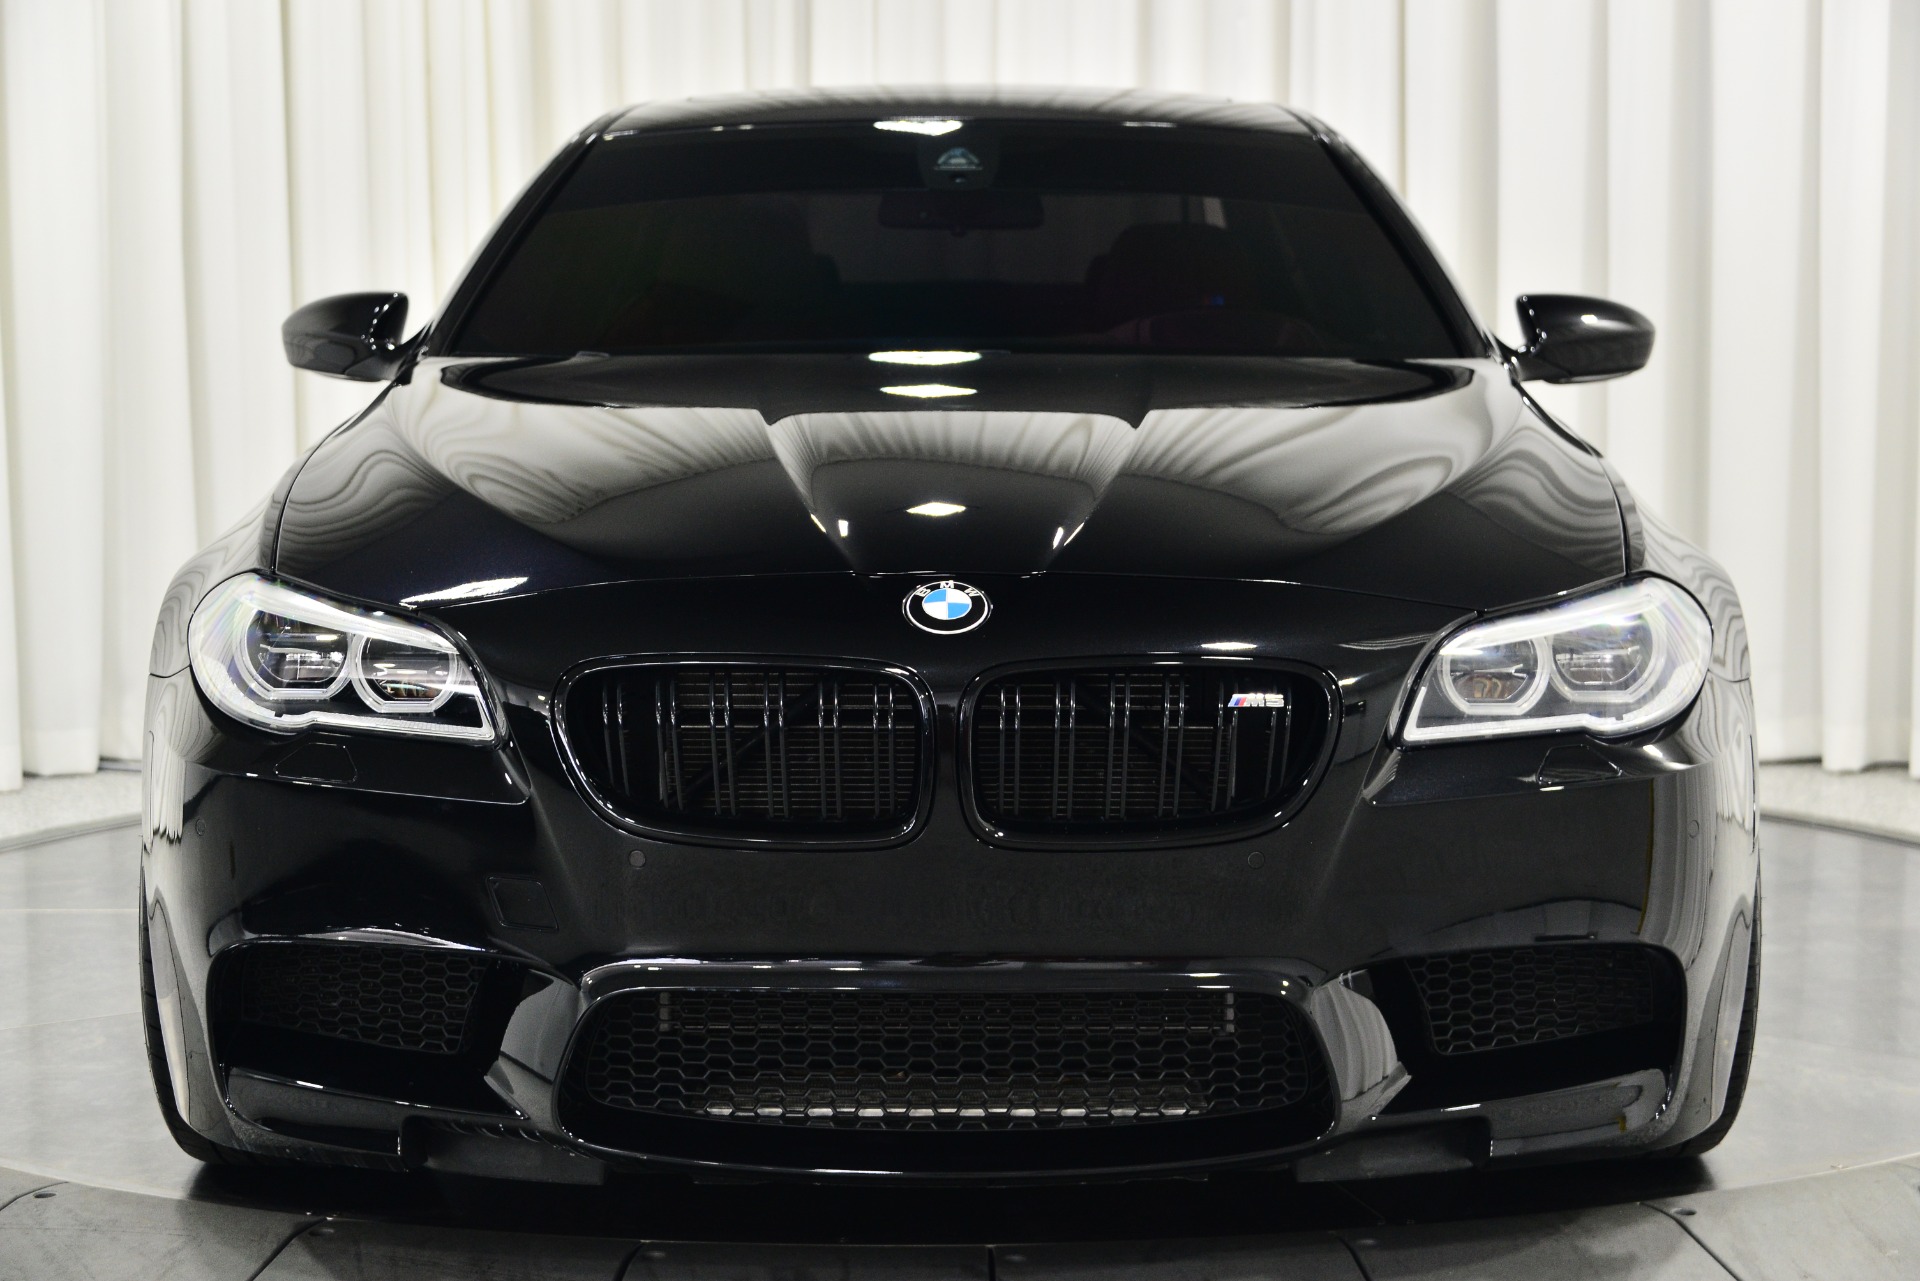 BMW M5 Black cars for sale in Australia 